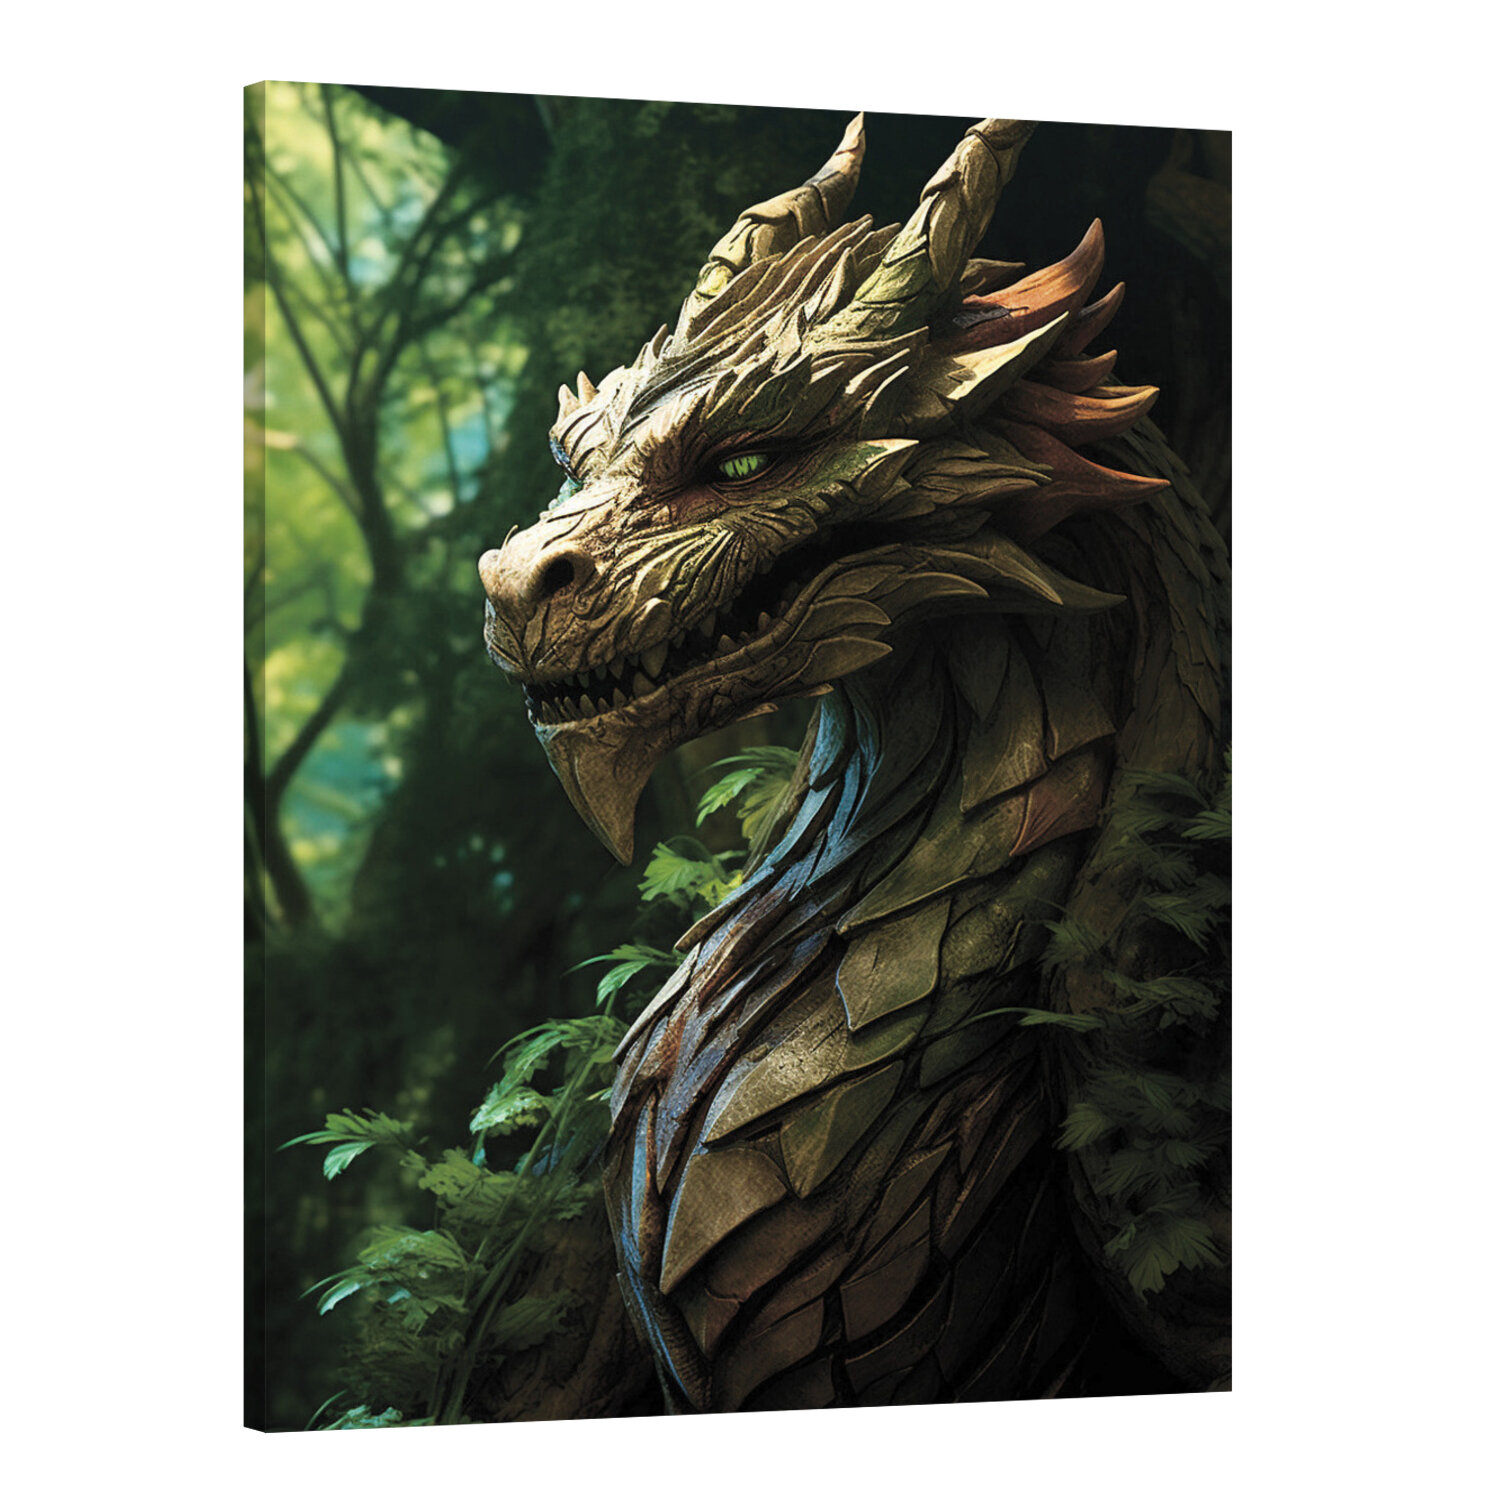 Интерьерная картина 50х70 "Древний дракон из дерева"